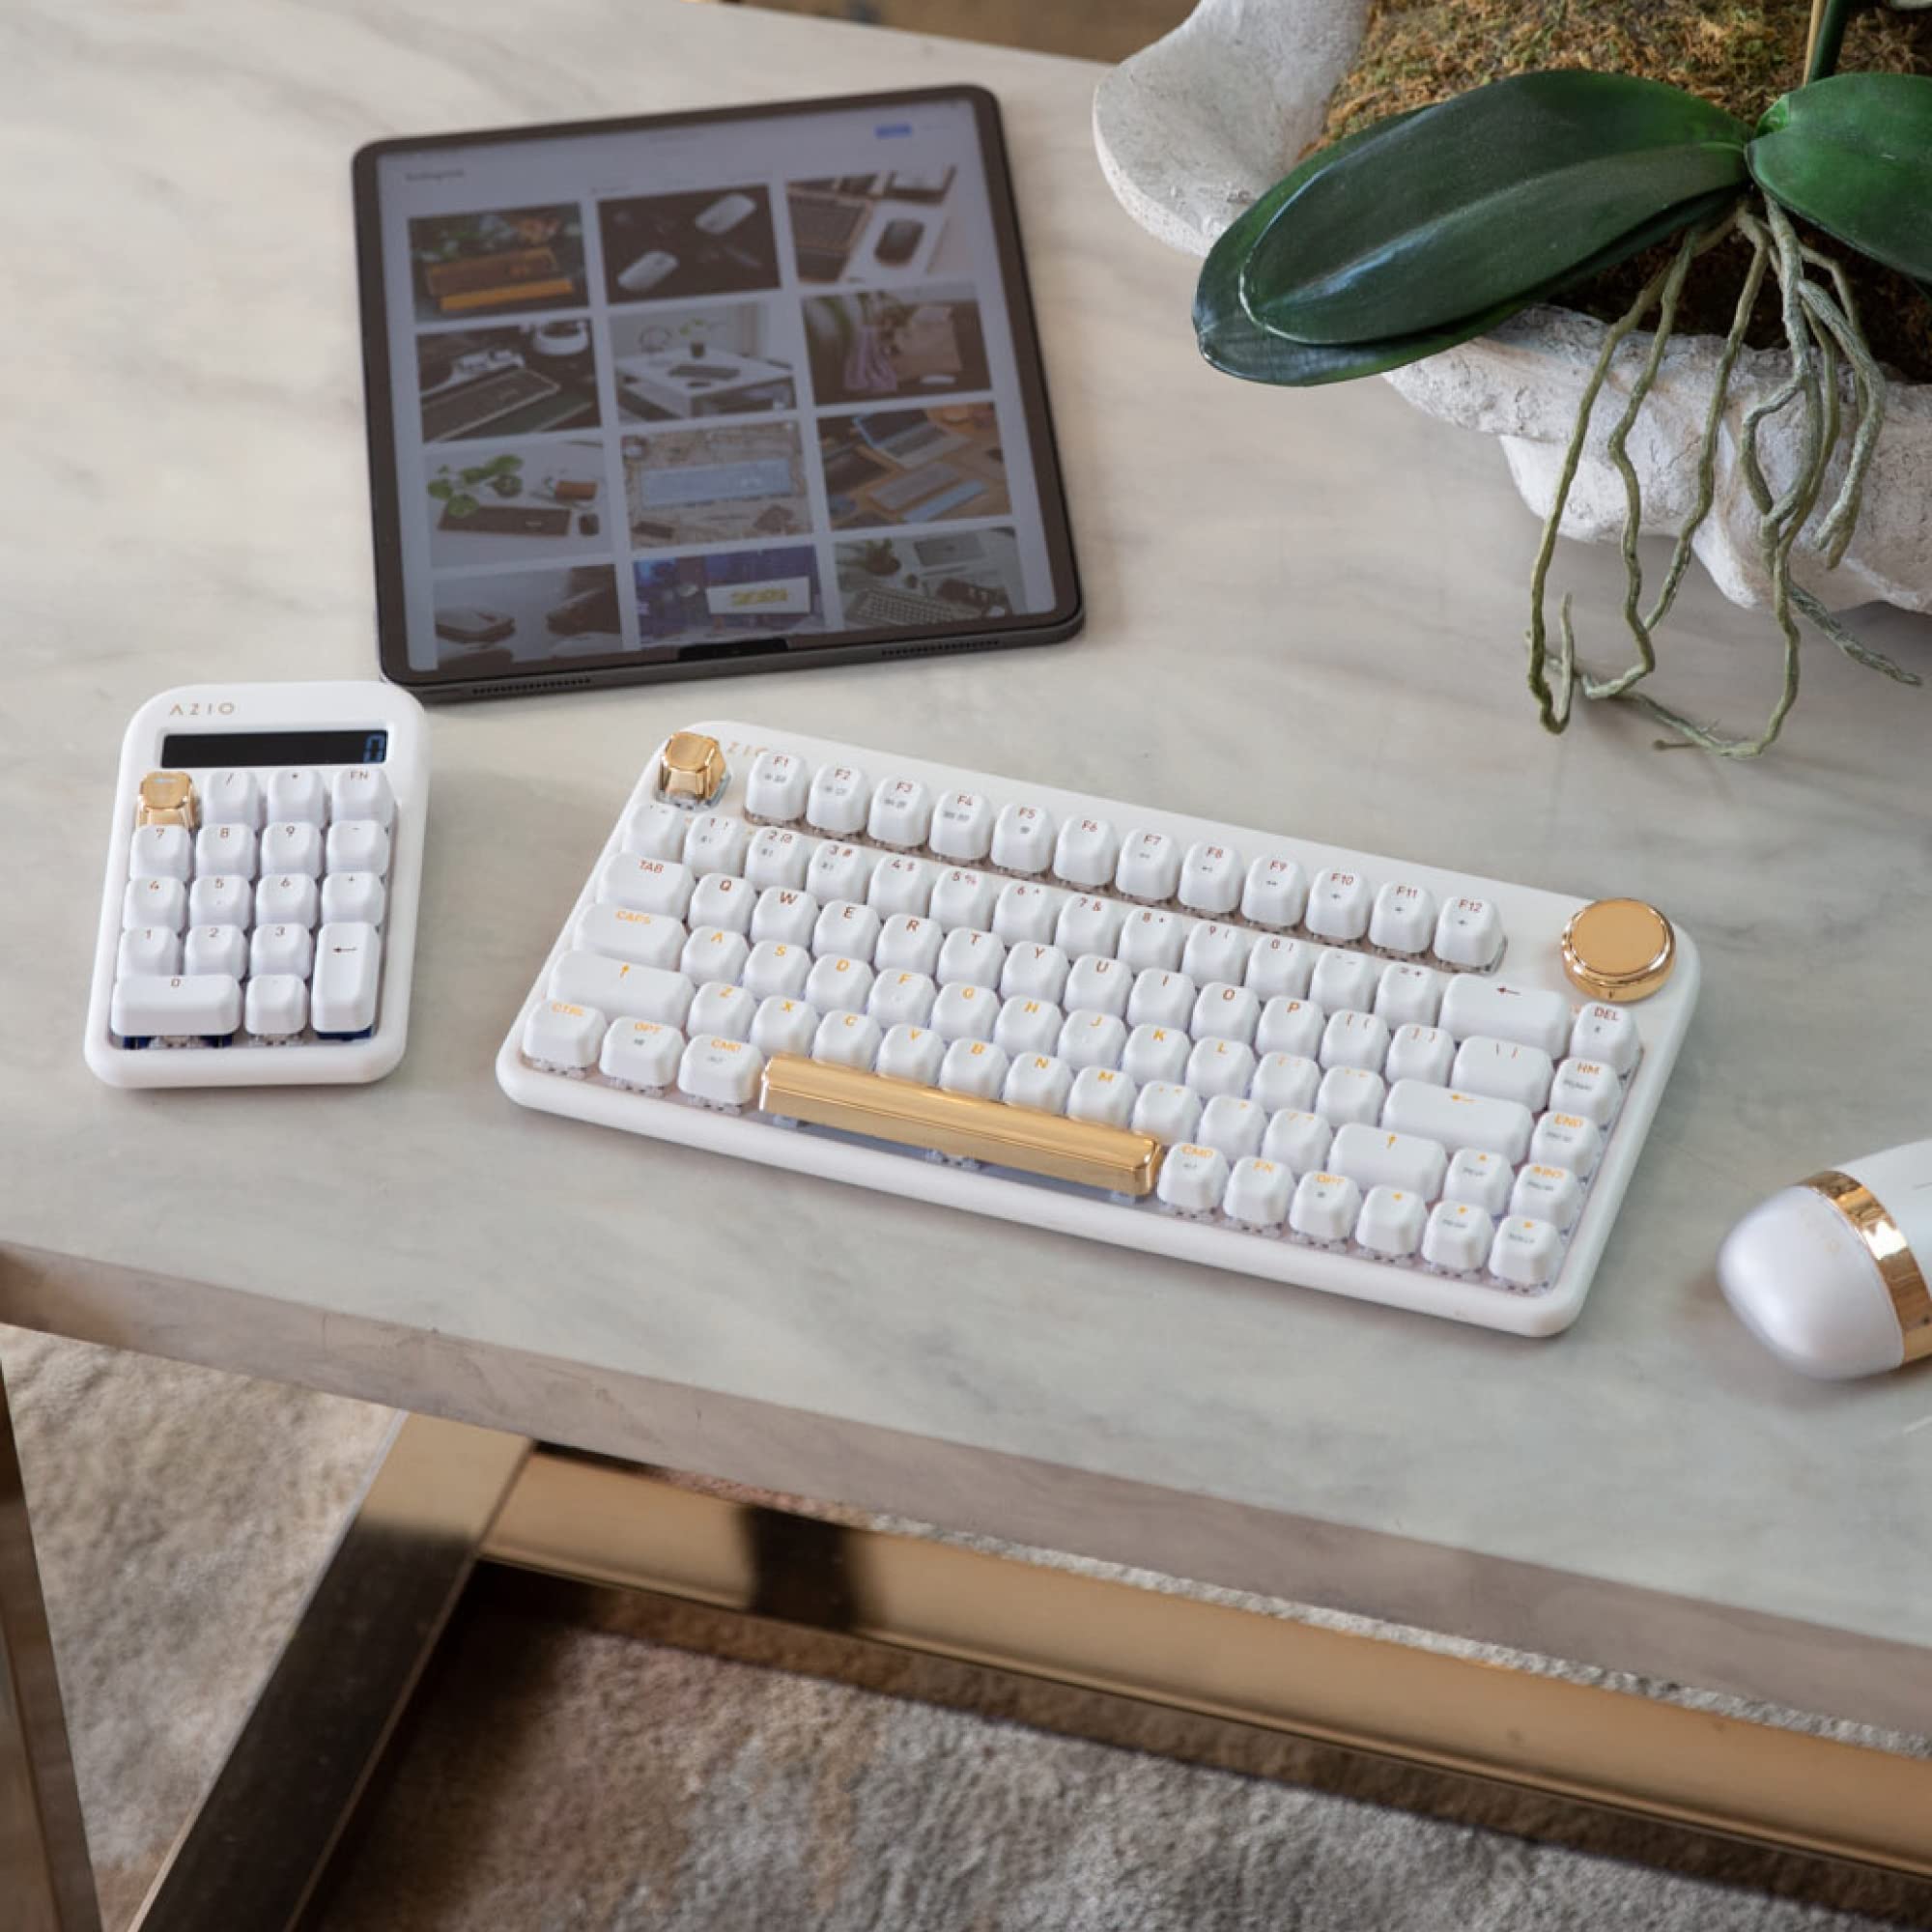 Azio IZO Wireless BT5/USB PC & Mac Mechanical Keyboard, White Blossom